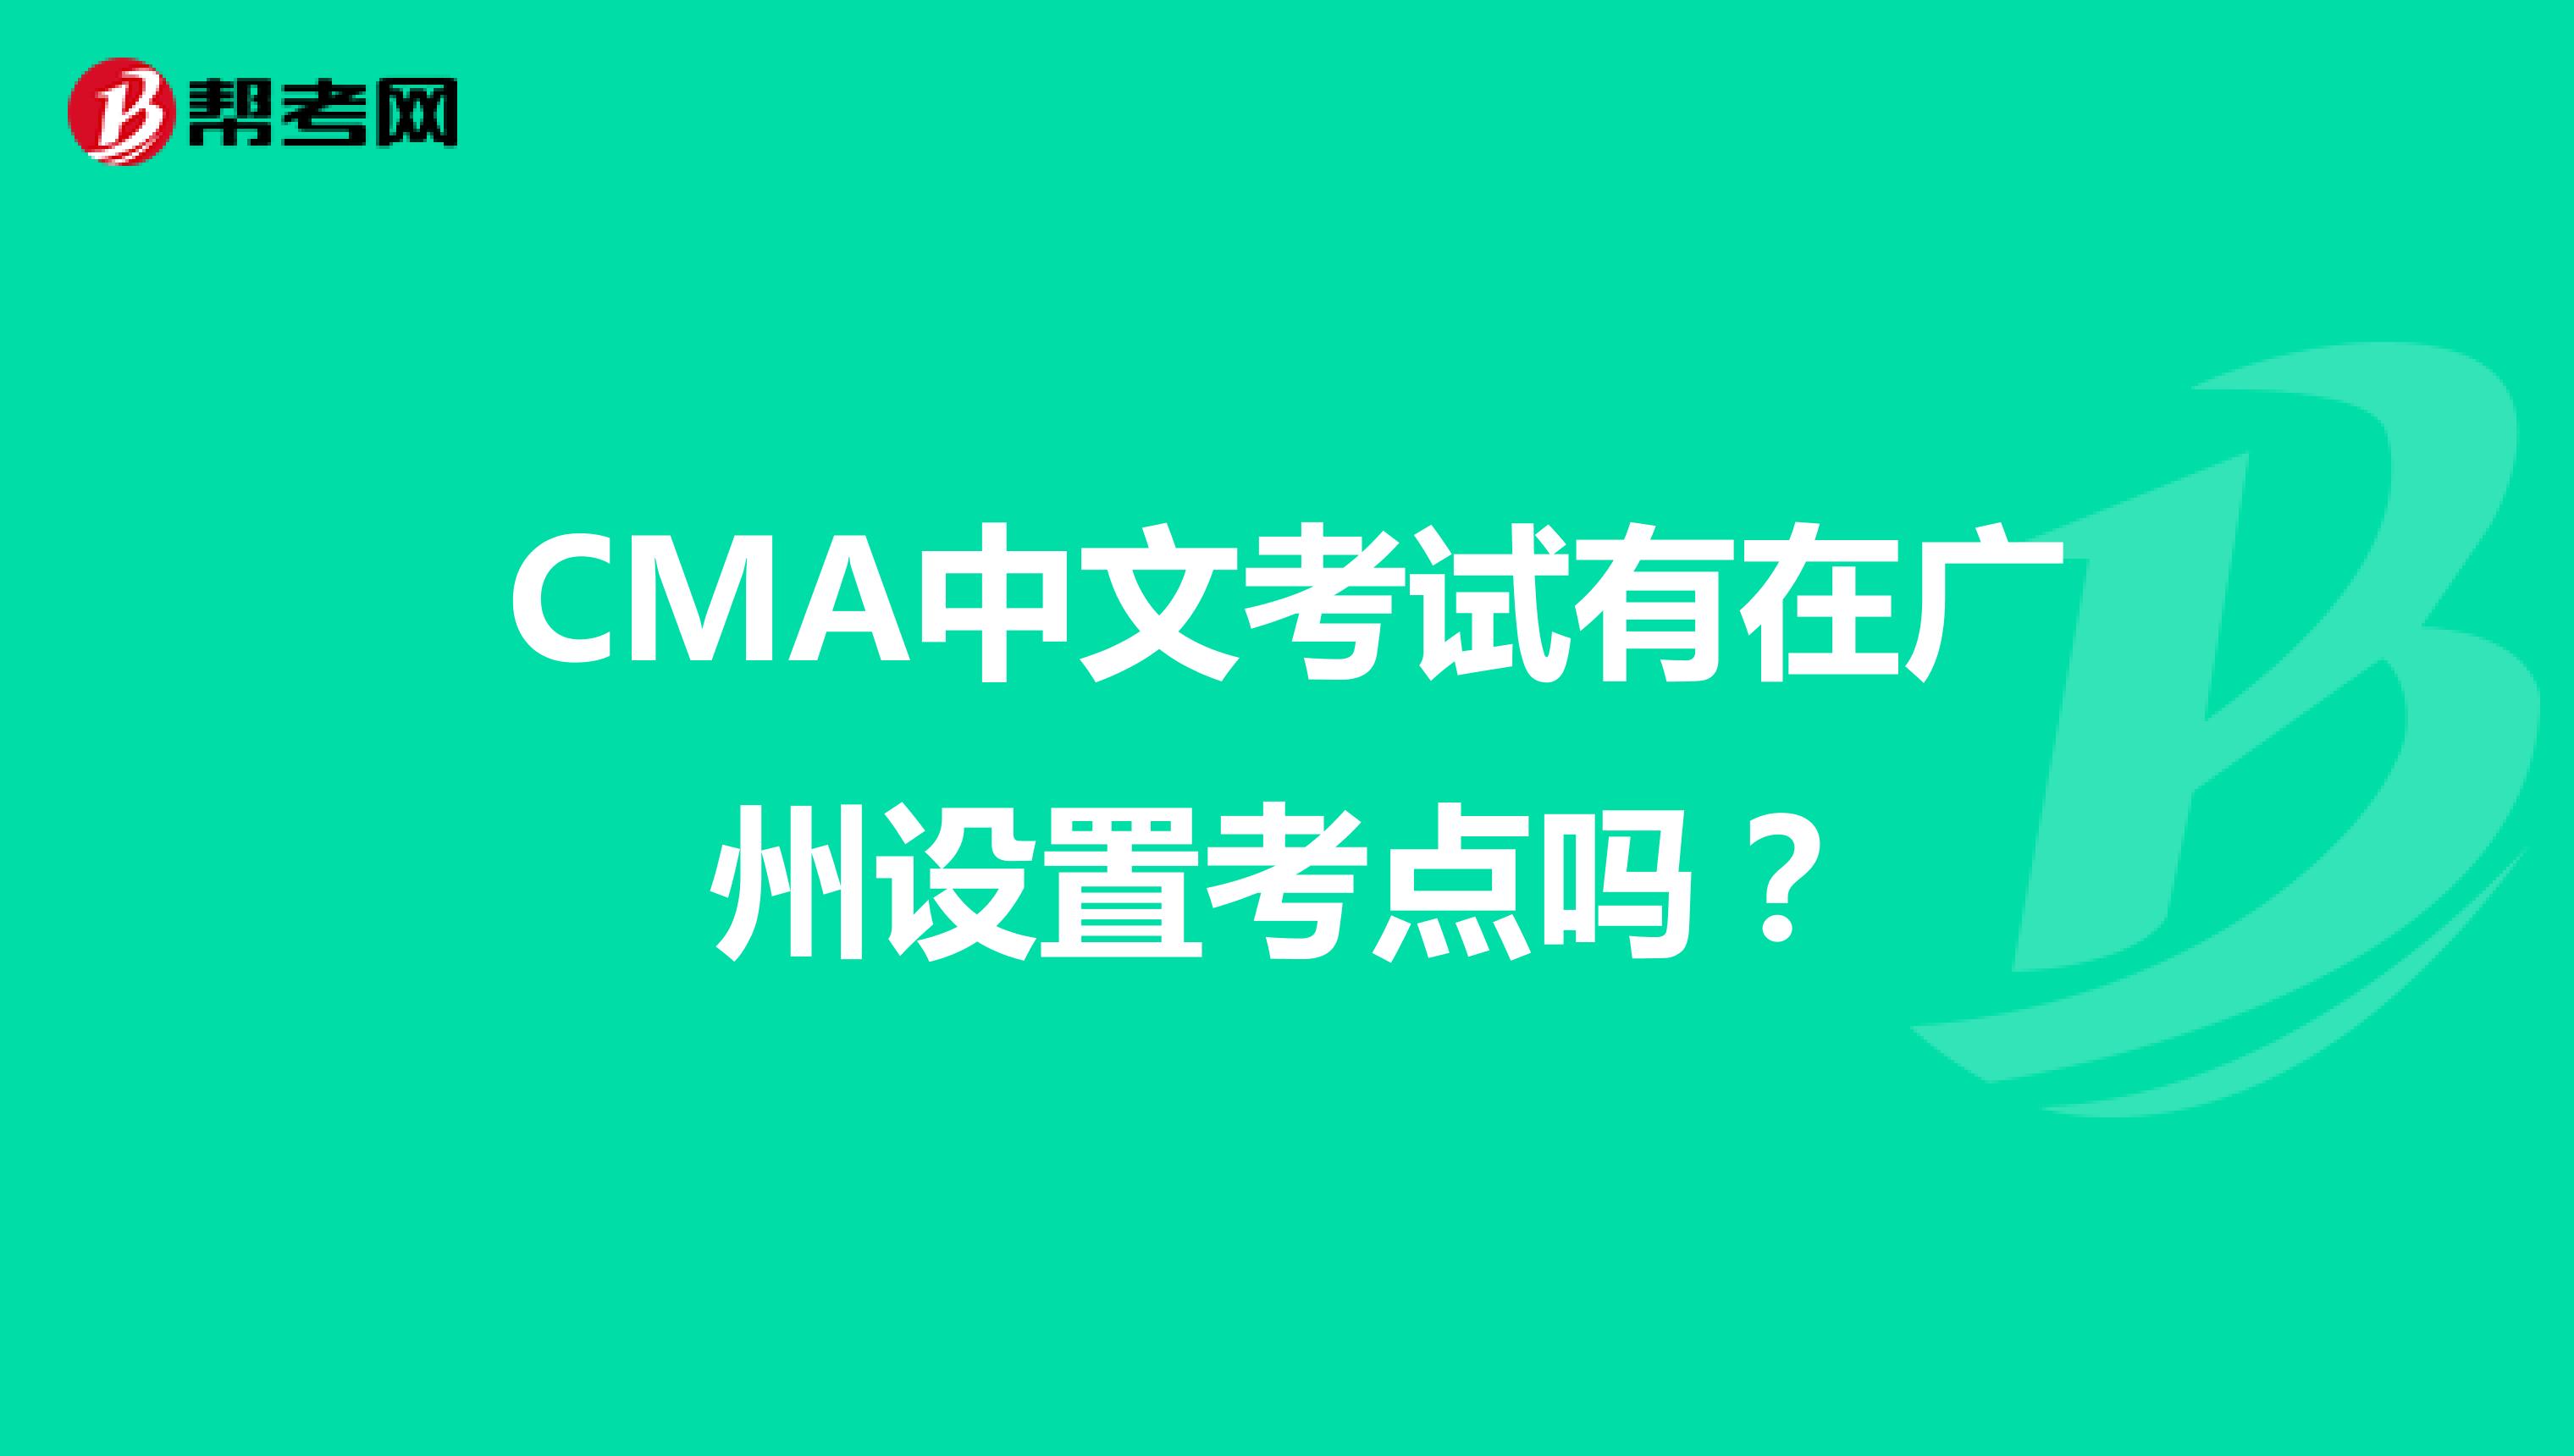 CMA中文考试有在广州设置考点吗？